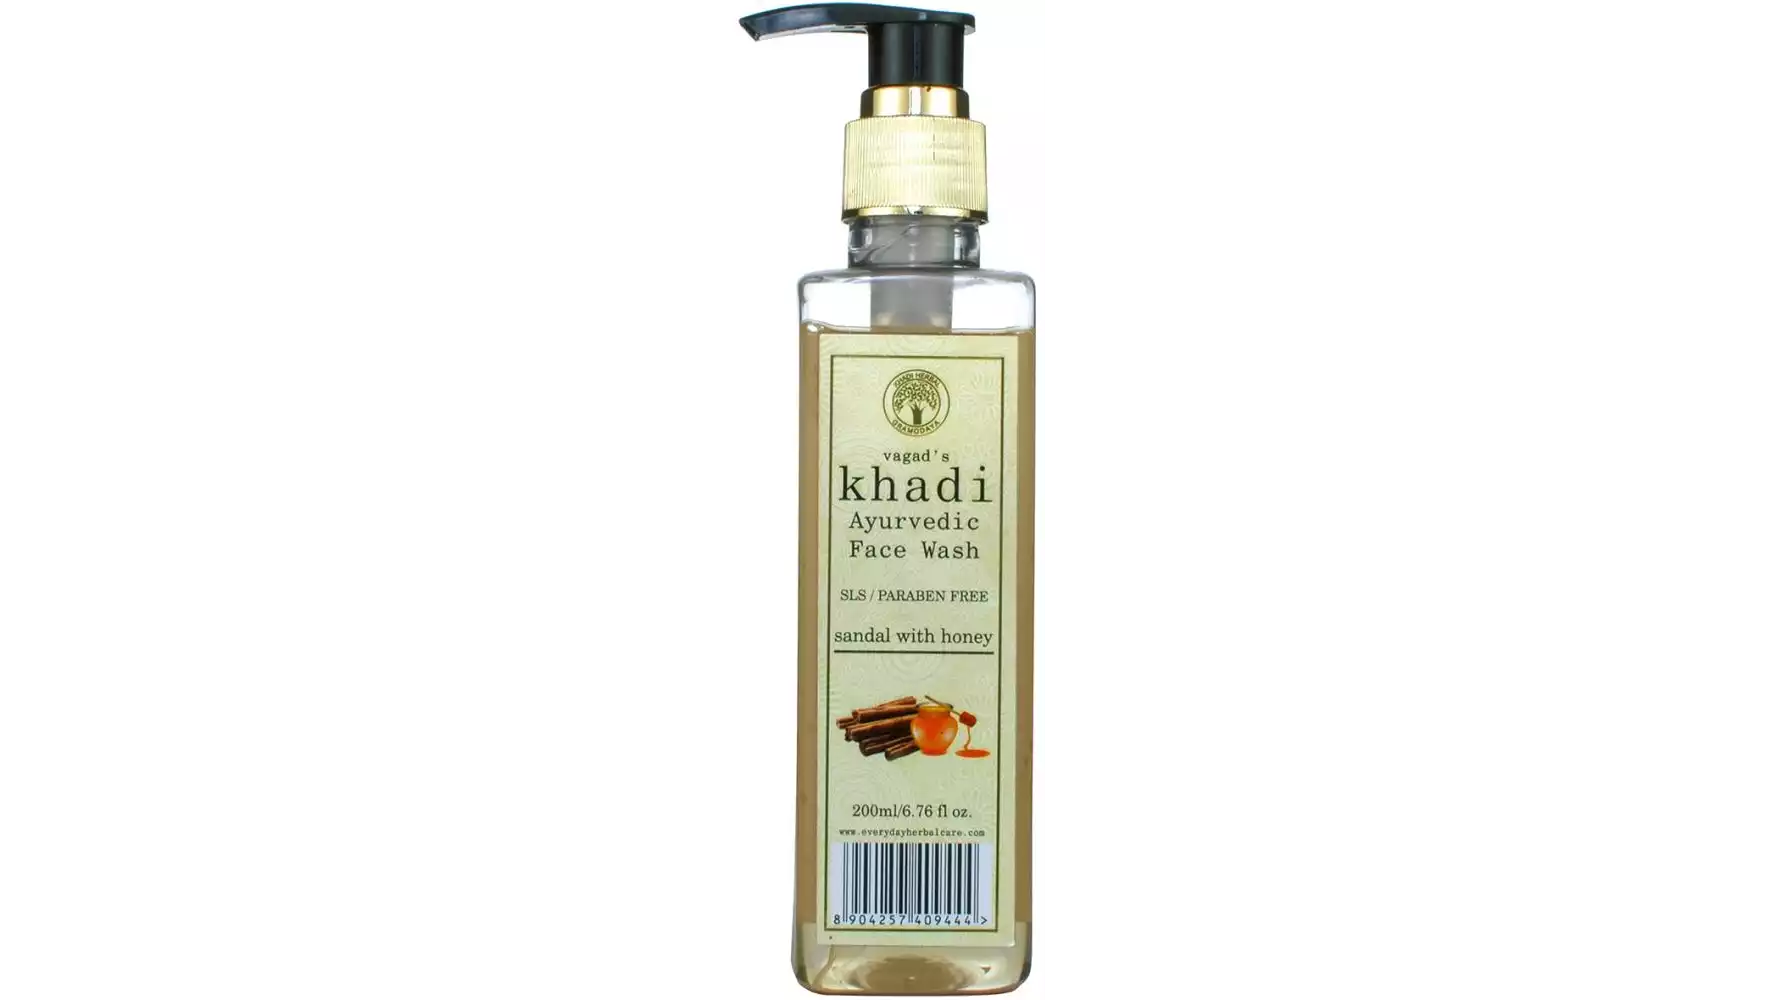 Vagads Khadi S.L.S And Paraben Free Sandal With Honey Face Wash (200ml)